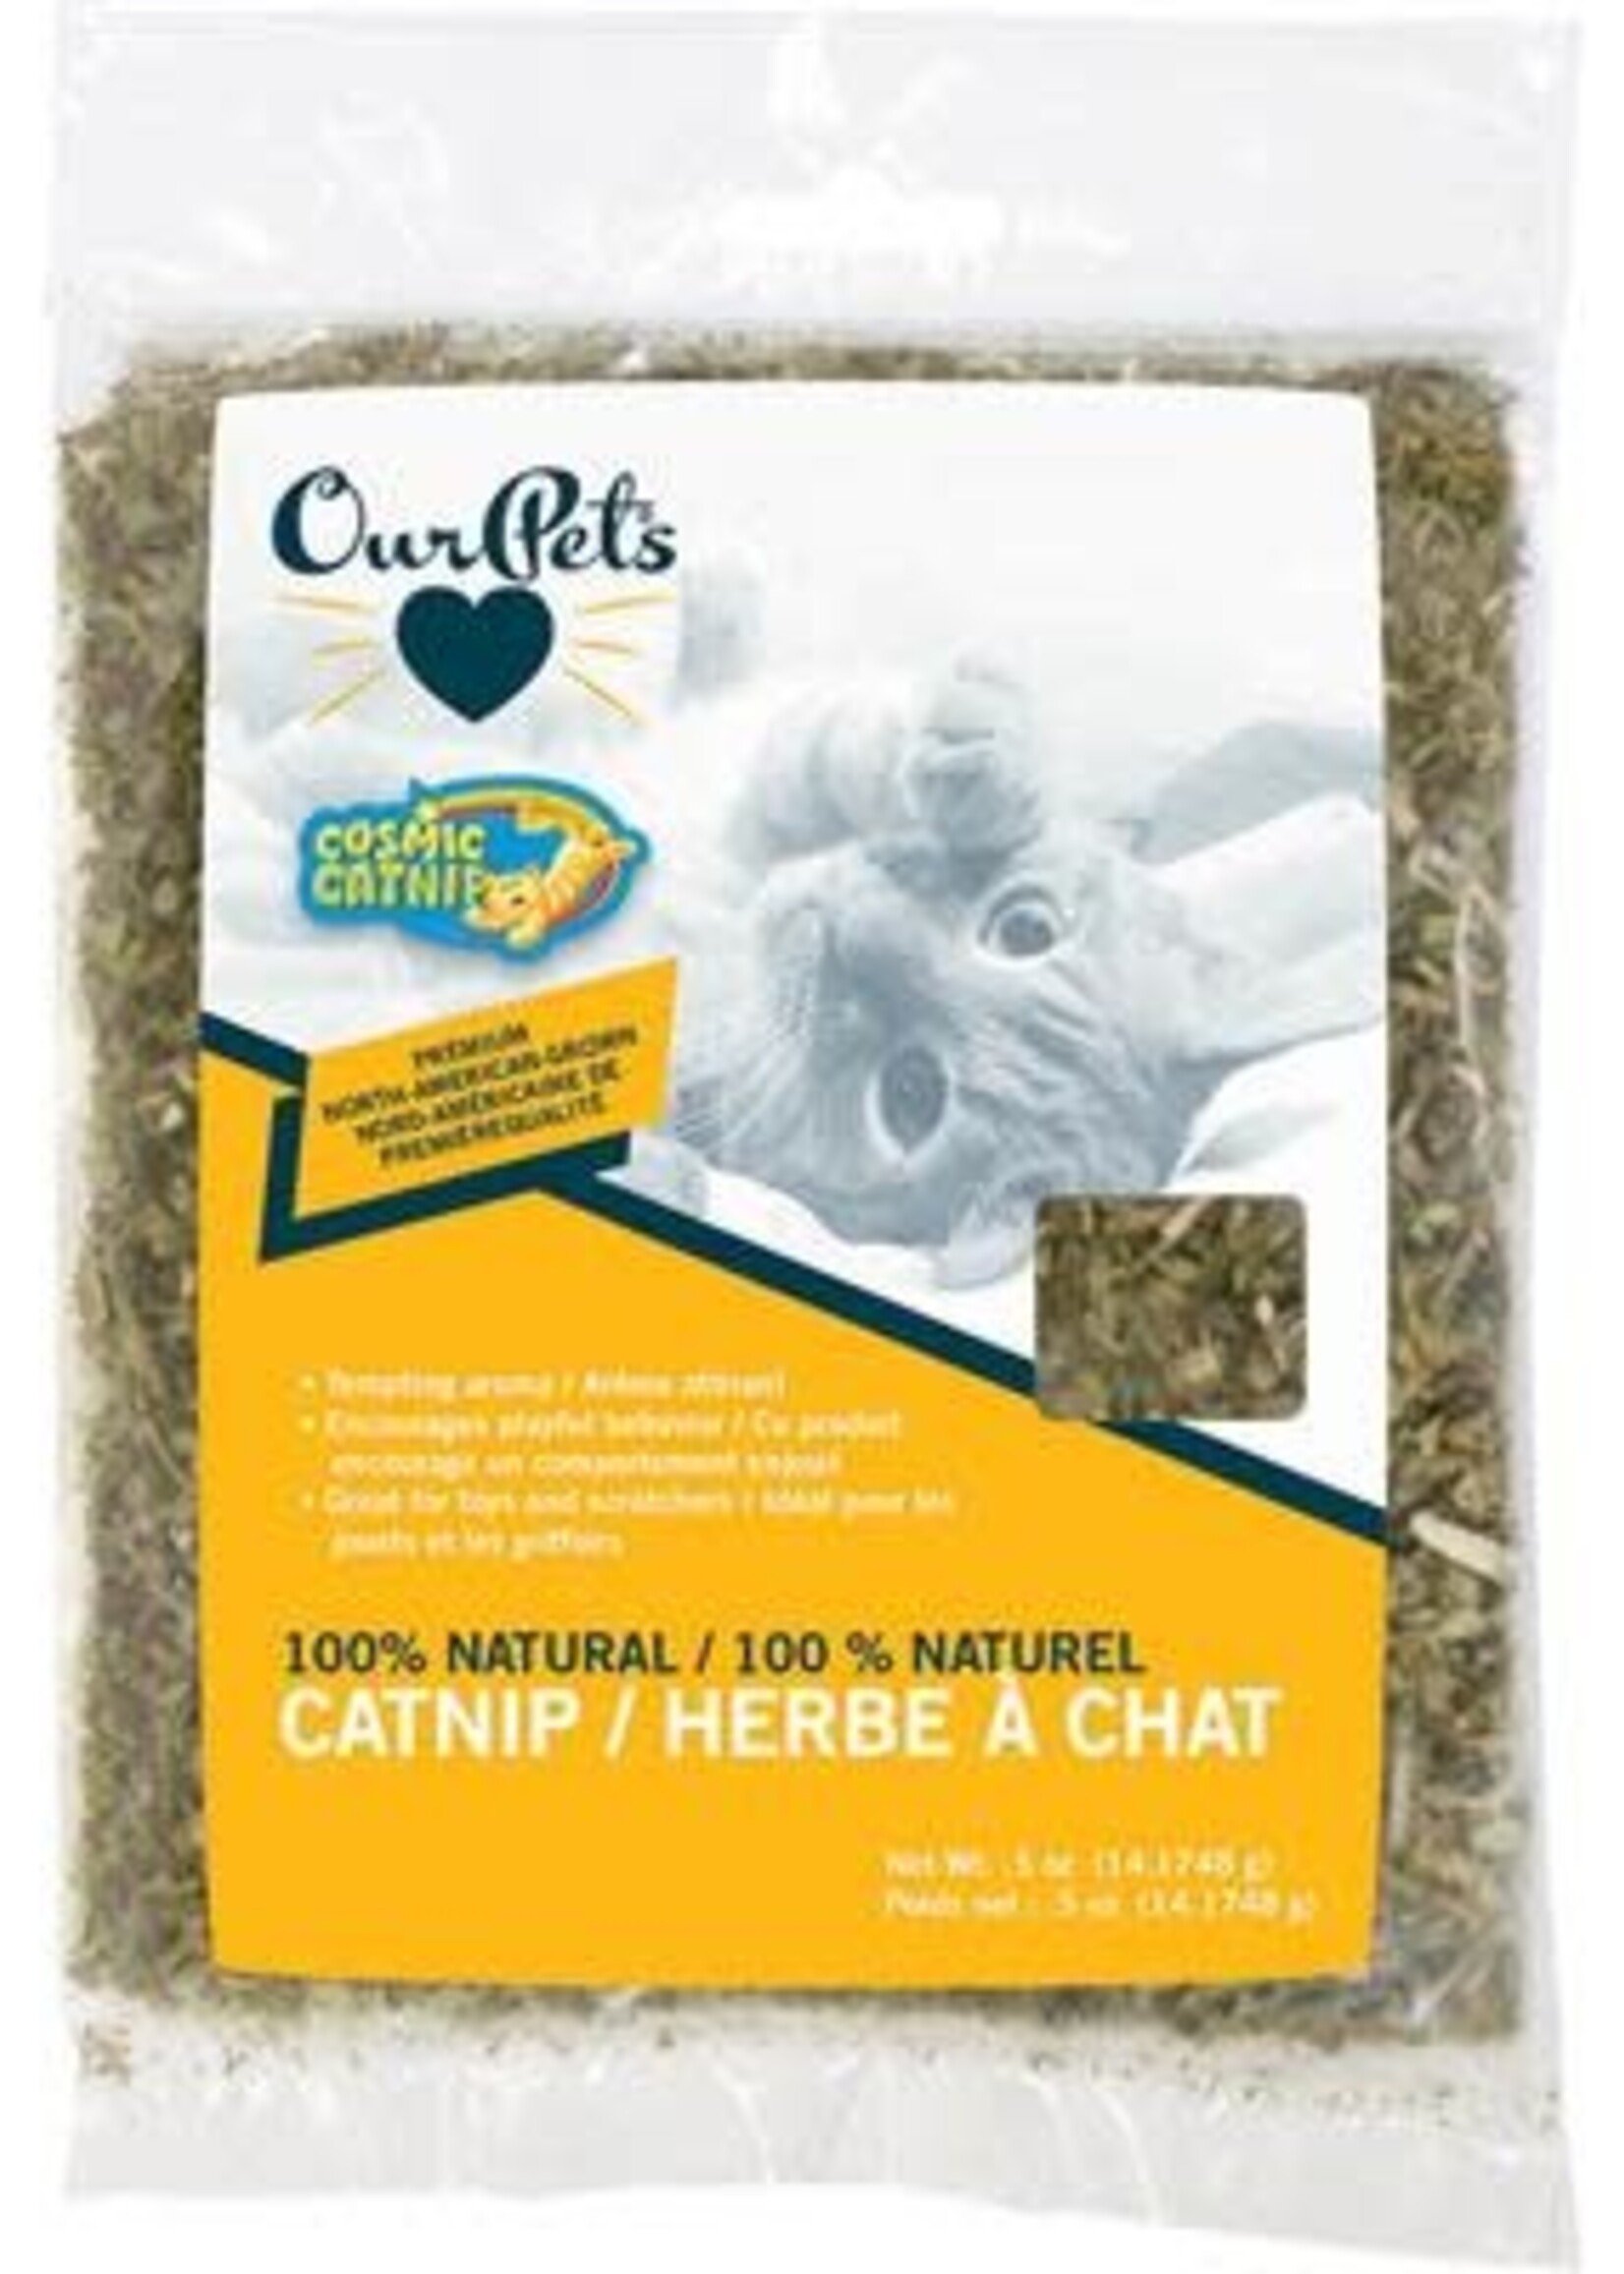 OurPets Cosmic Premium Natural Catnip .5OZ